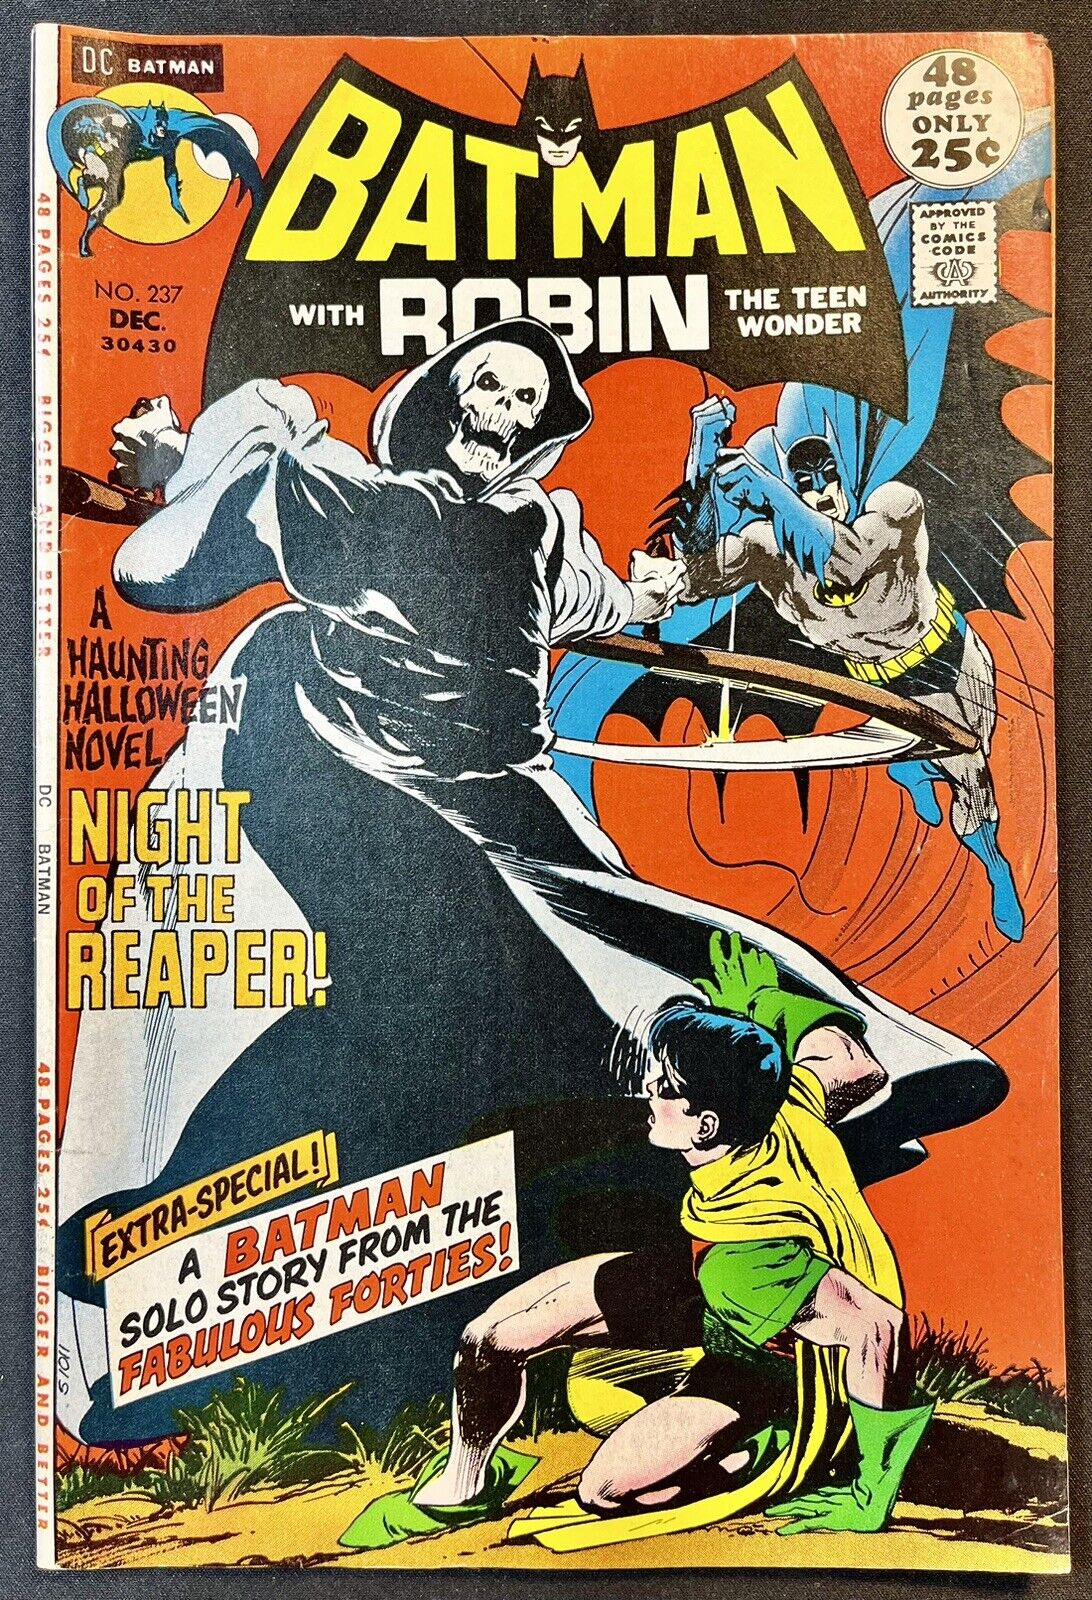 Batman With Robin #237 (DC Comics, 1971) 1st App. Reaper - Neal Adams Cover Art